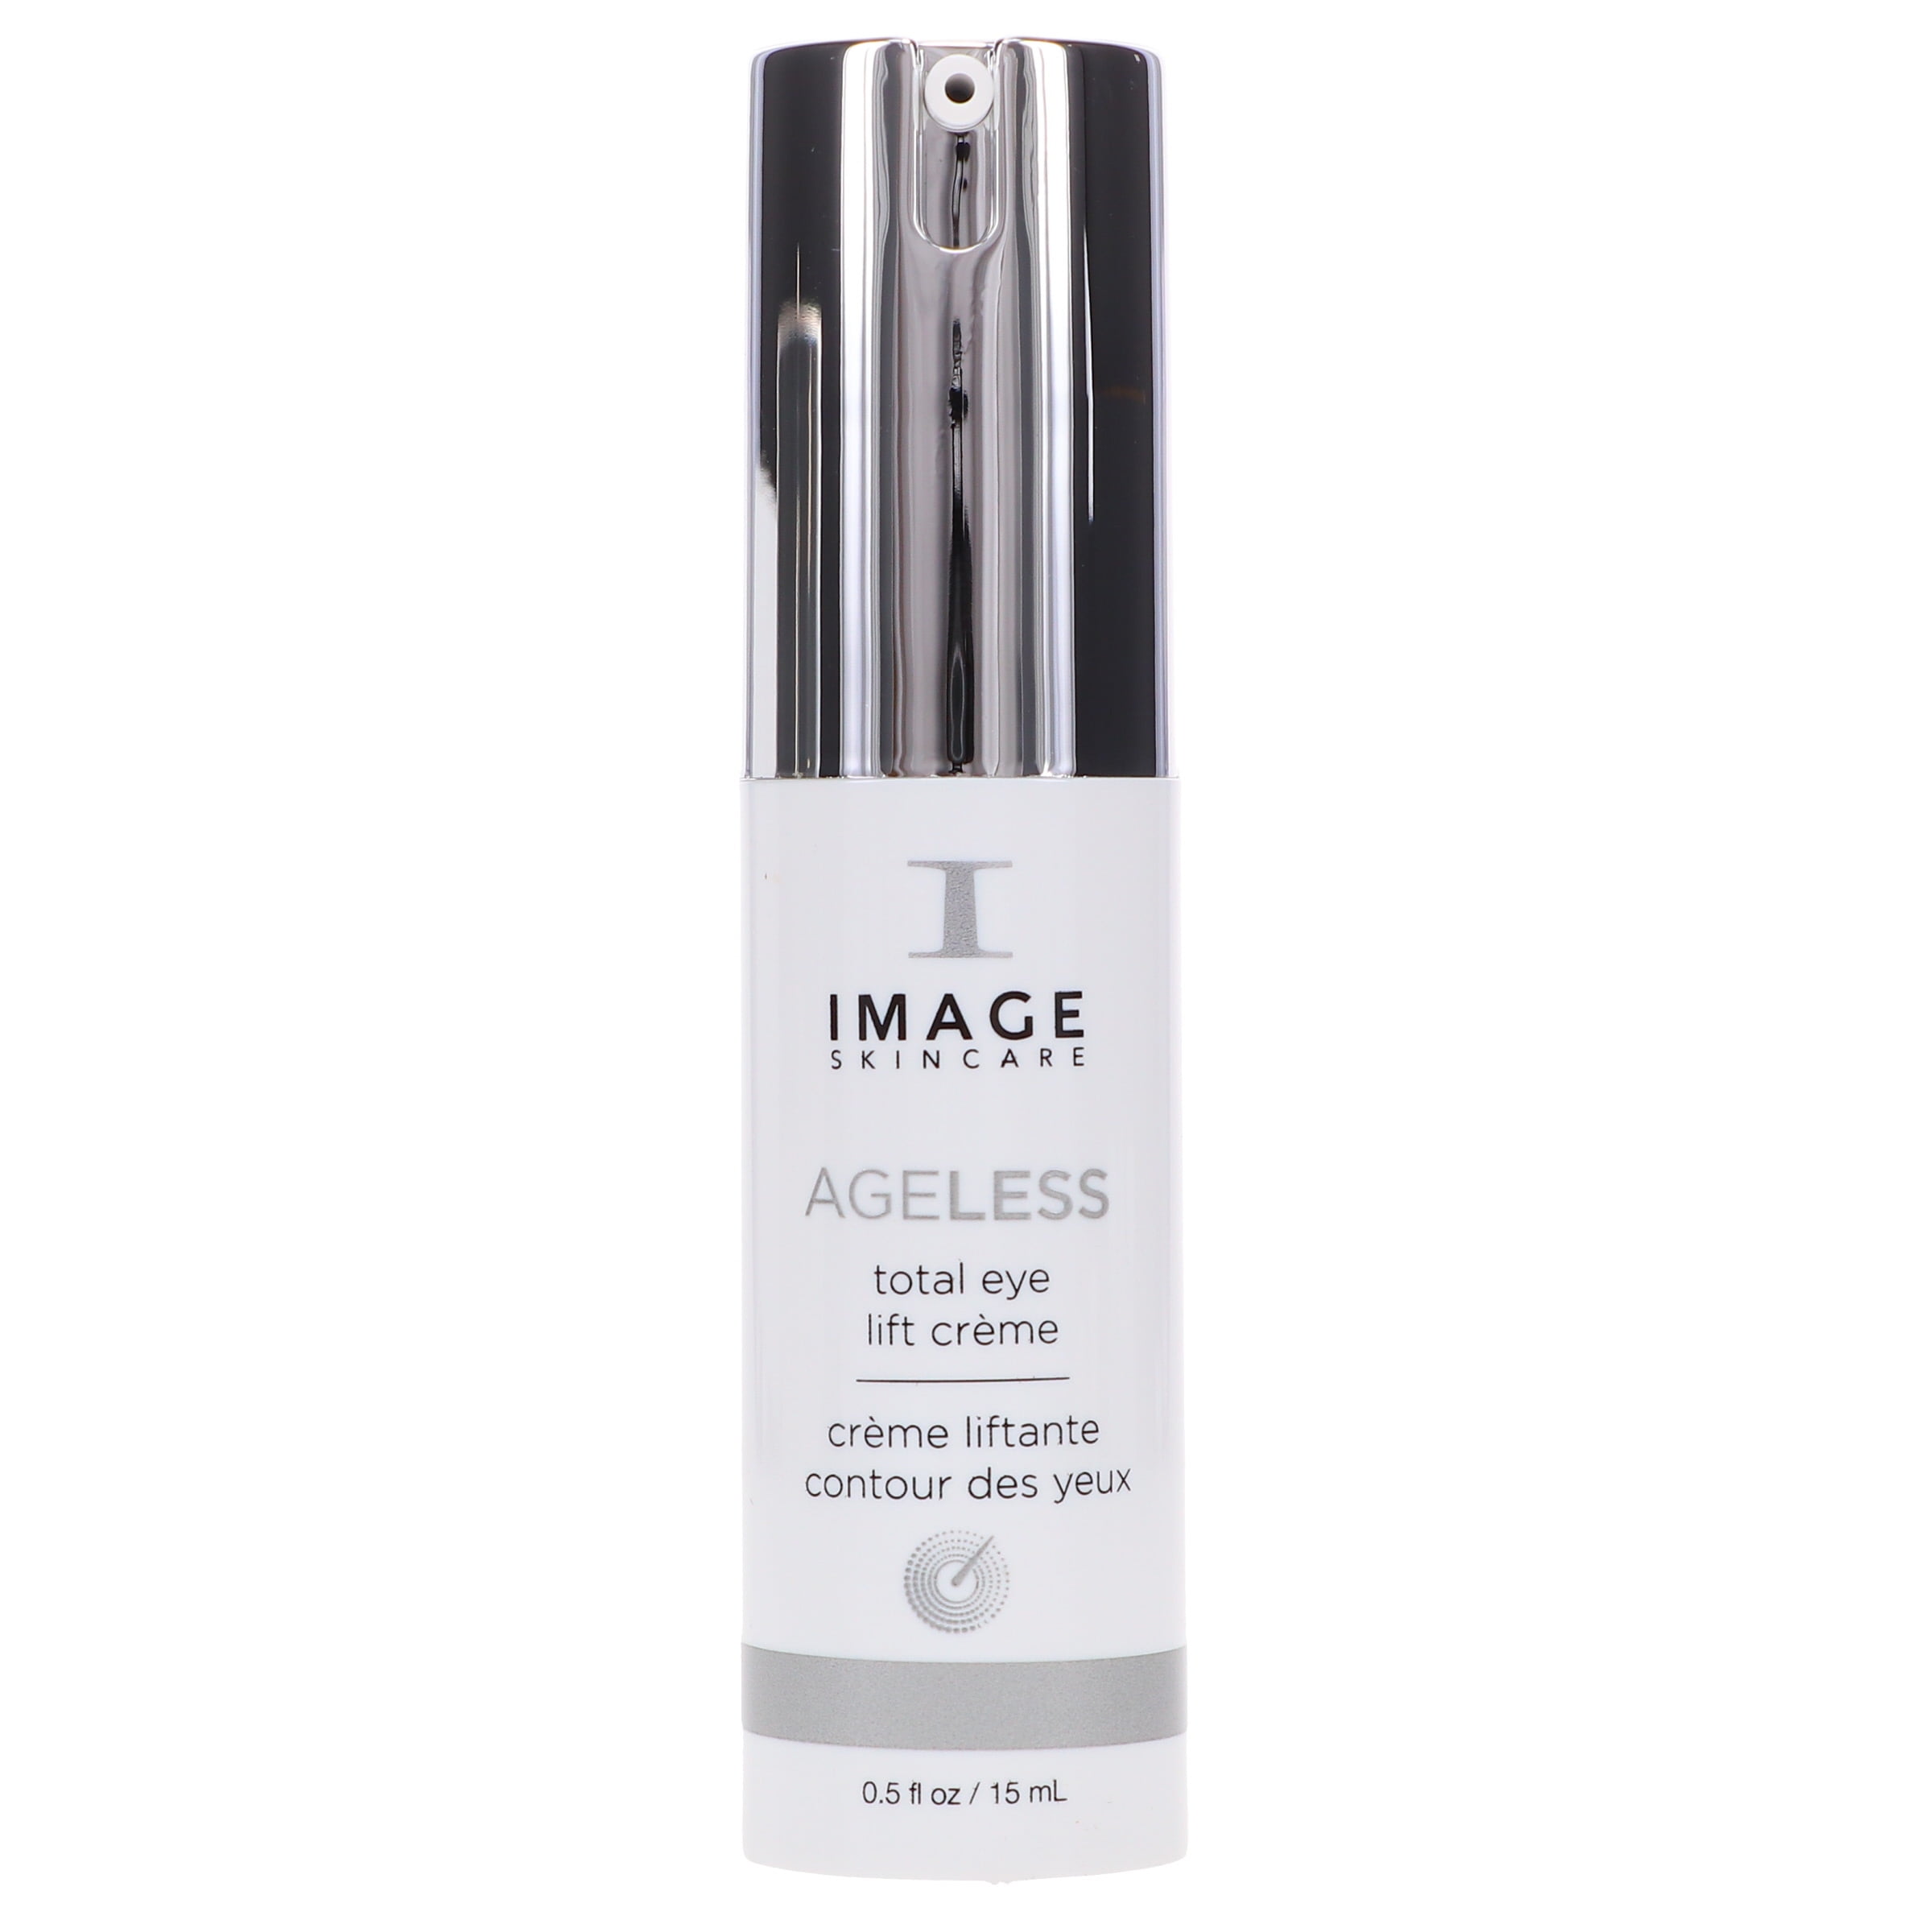 IMAGE Skincare Ageless Total Eye Lift Creme 0.5 oz - image 1 of 8